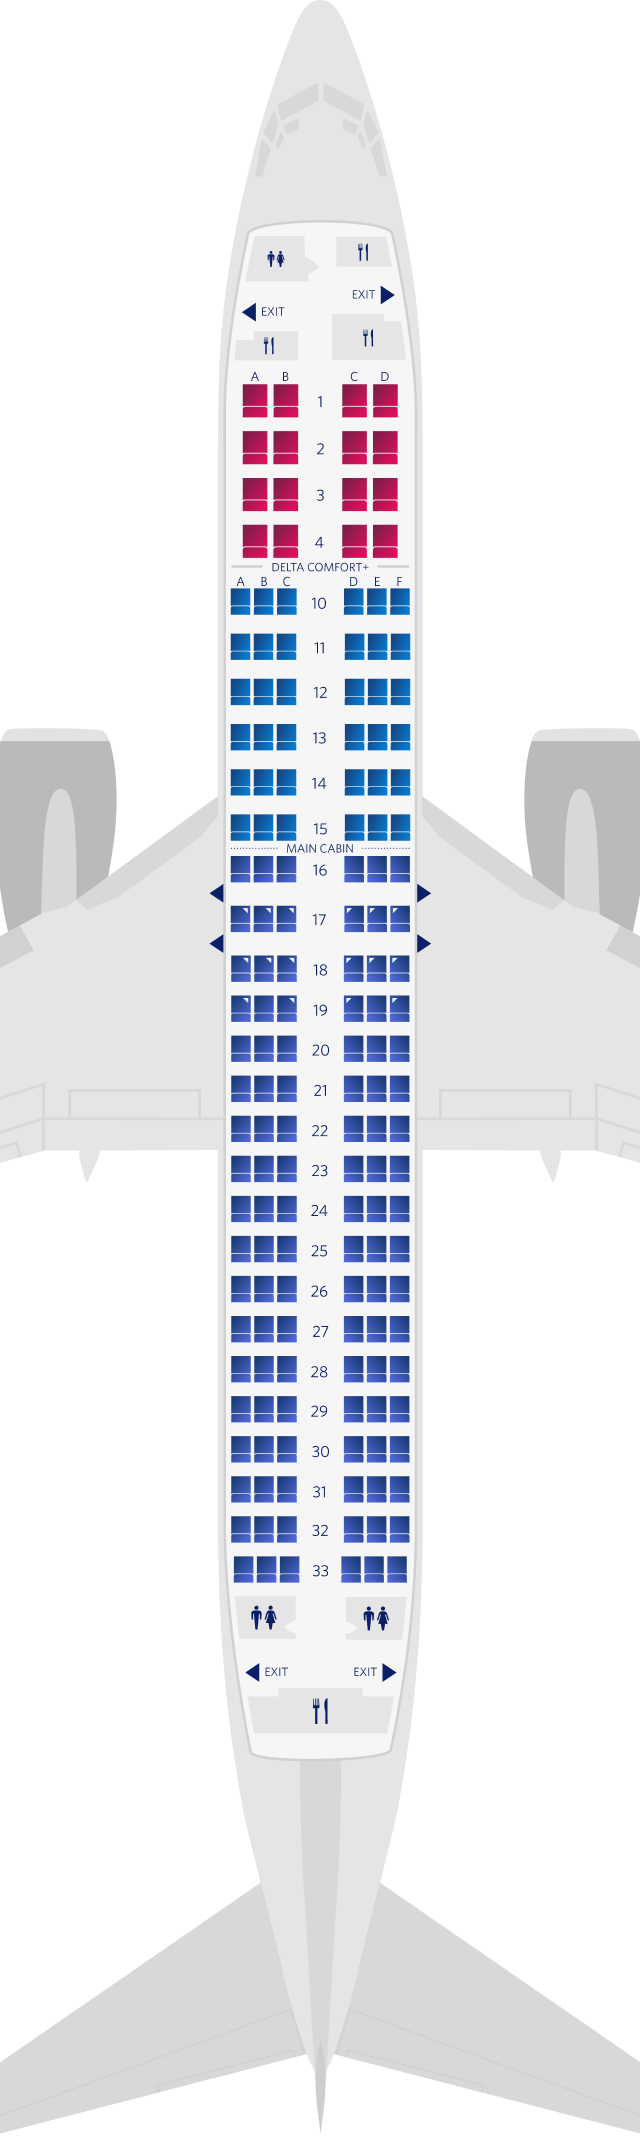 Boeing 737-800 seat map